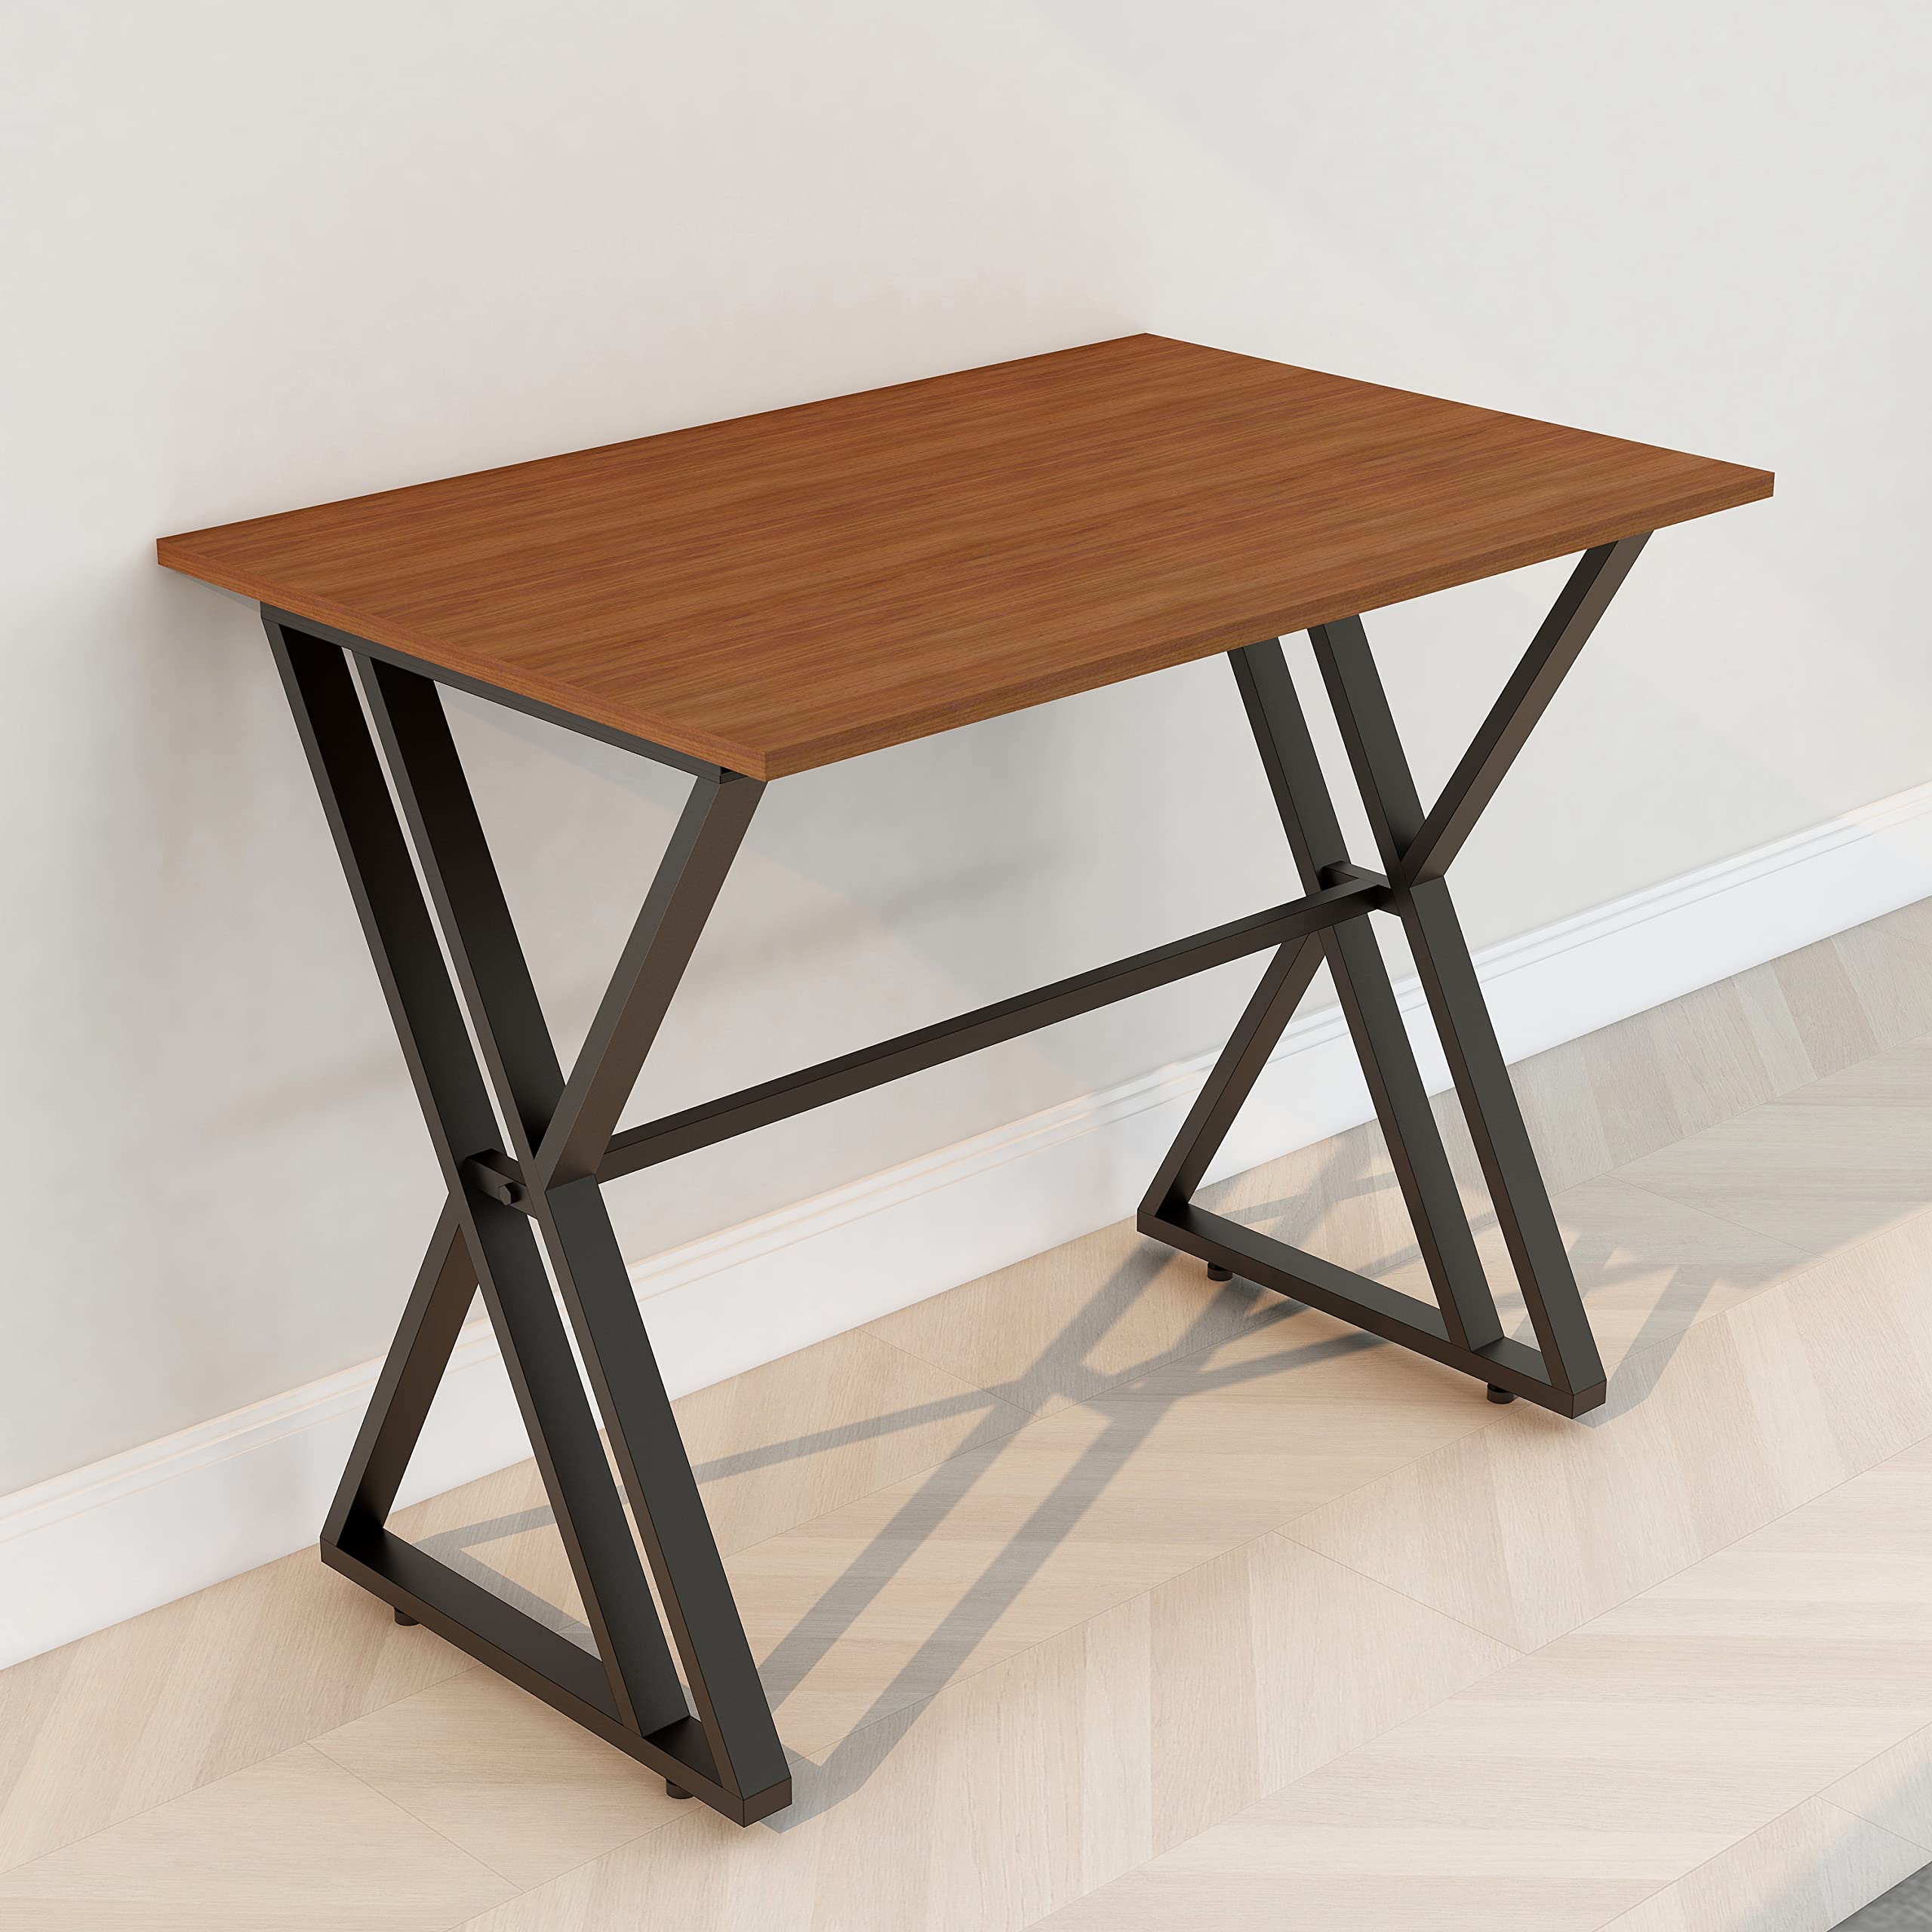 Plantex DIY Study Table/Laptop Table/Desk for Office/Home/Classroom/X-Leg Foldable Table-Workstation (Walnut Textured, APS-1011)